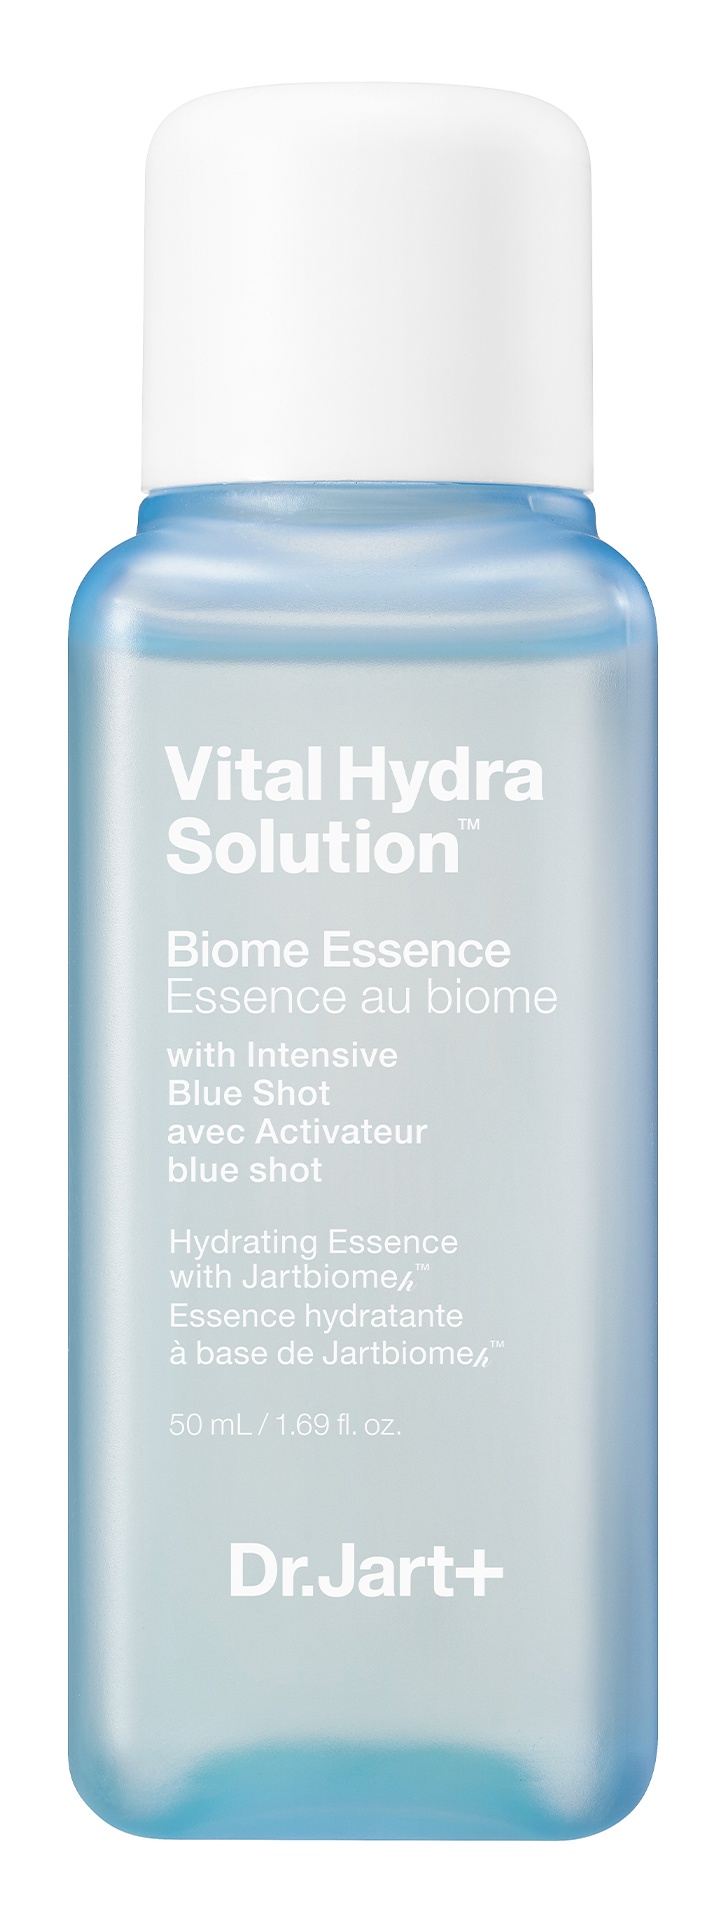 Dr. Jart+ Vital Hydra Solution Biome Essence